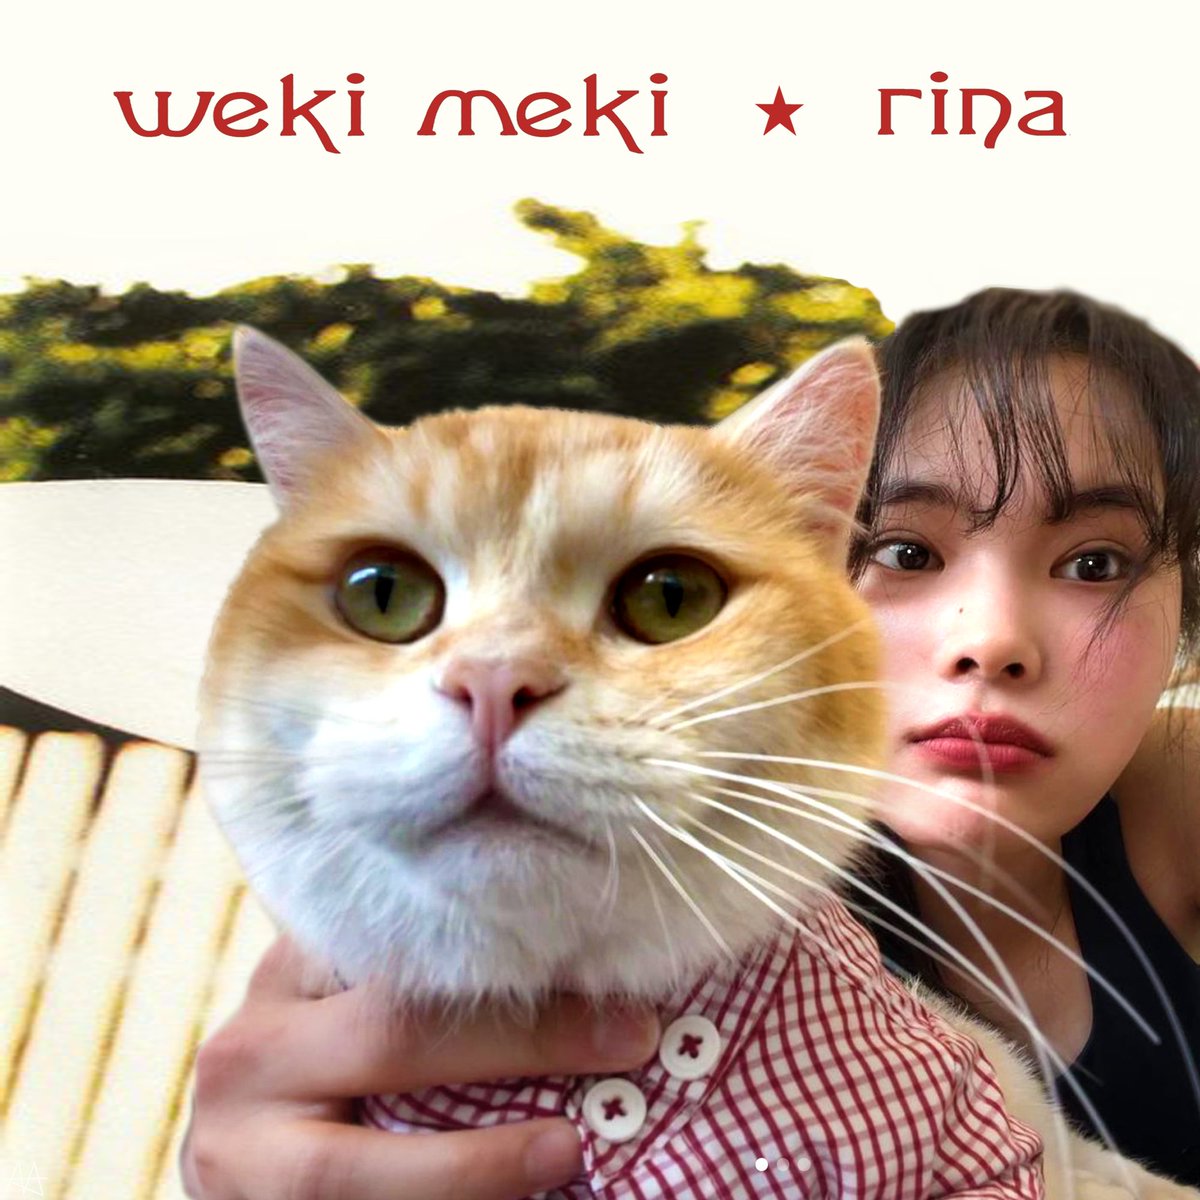 #009 - Posting @weki_meki memes every day until the comeback.

#WekiMeki #위키미키 #SmashingPumpkins #SiameseDream